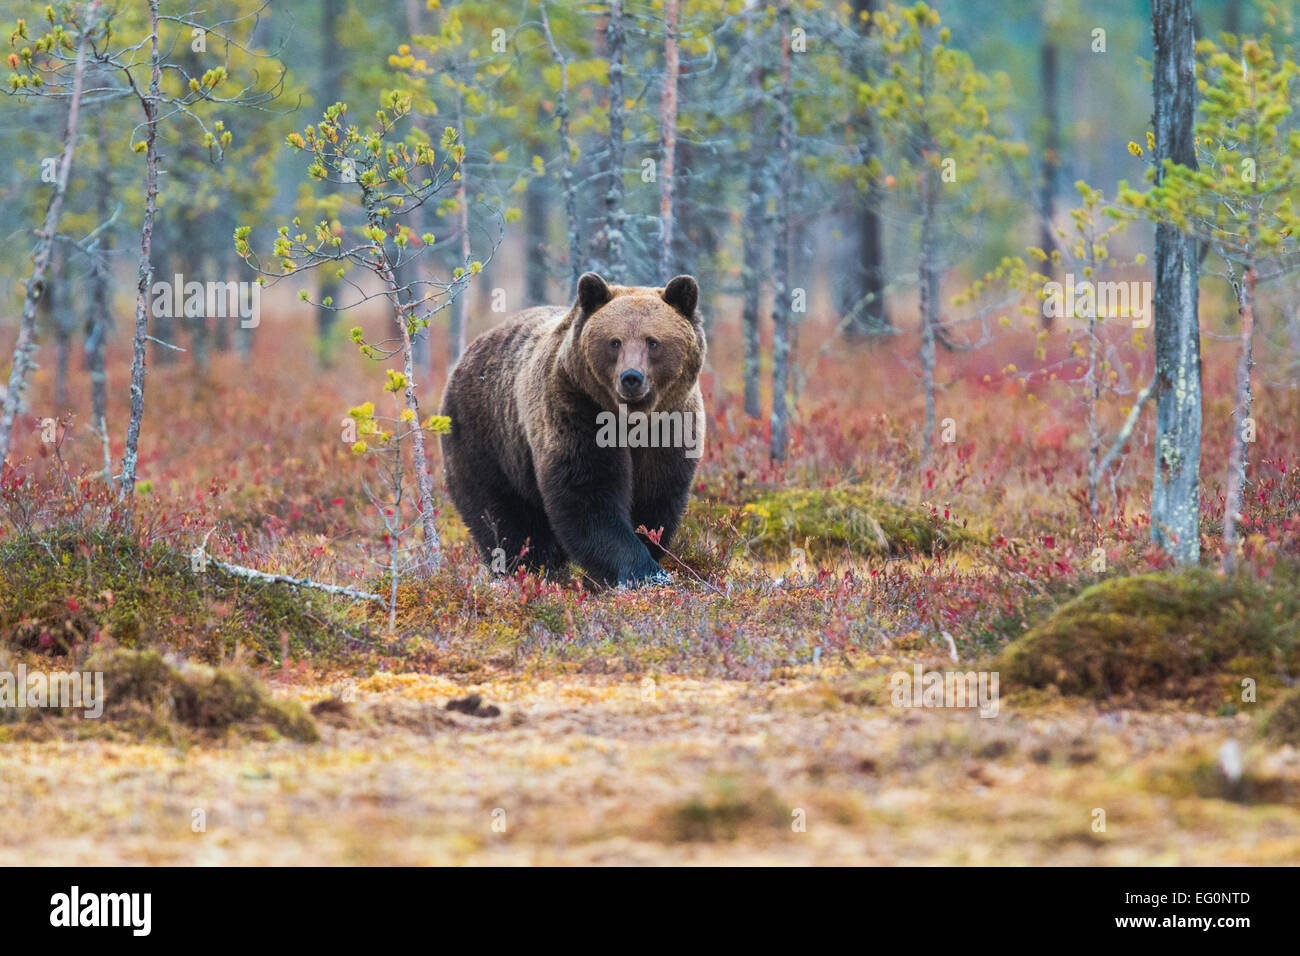 Brown bear, Ursus arctos, walking in red autumn colored bushes, Kuhmo, Finland Stock Photo